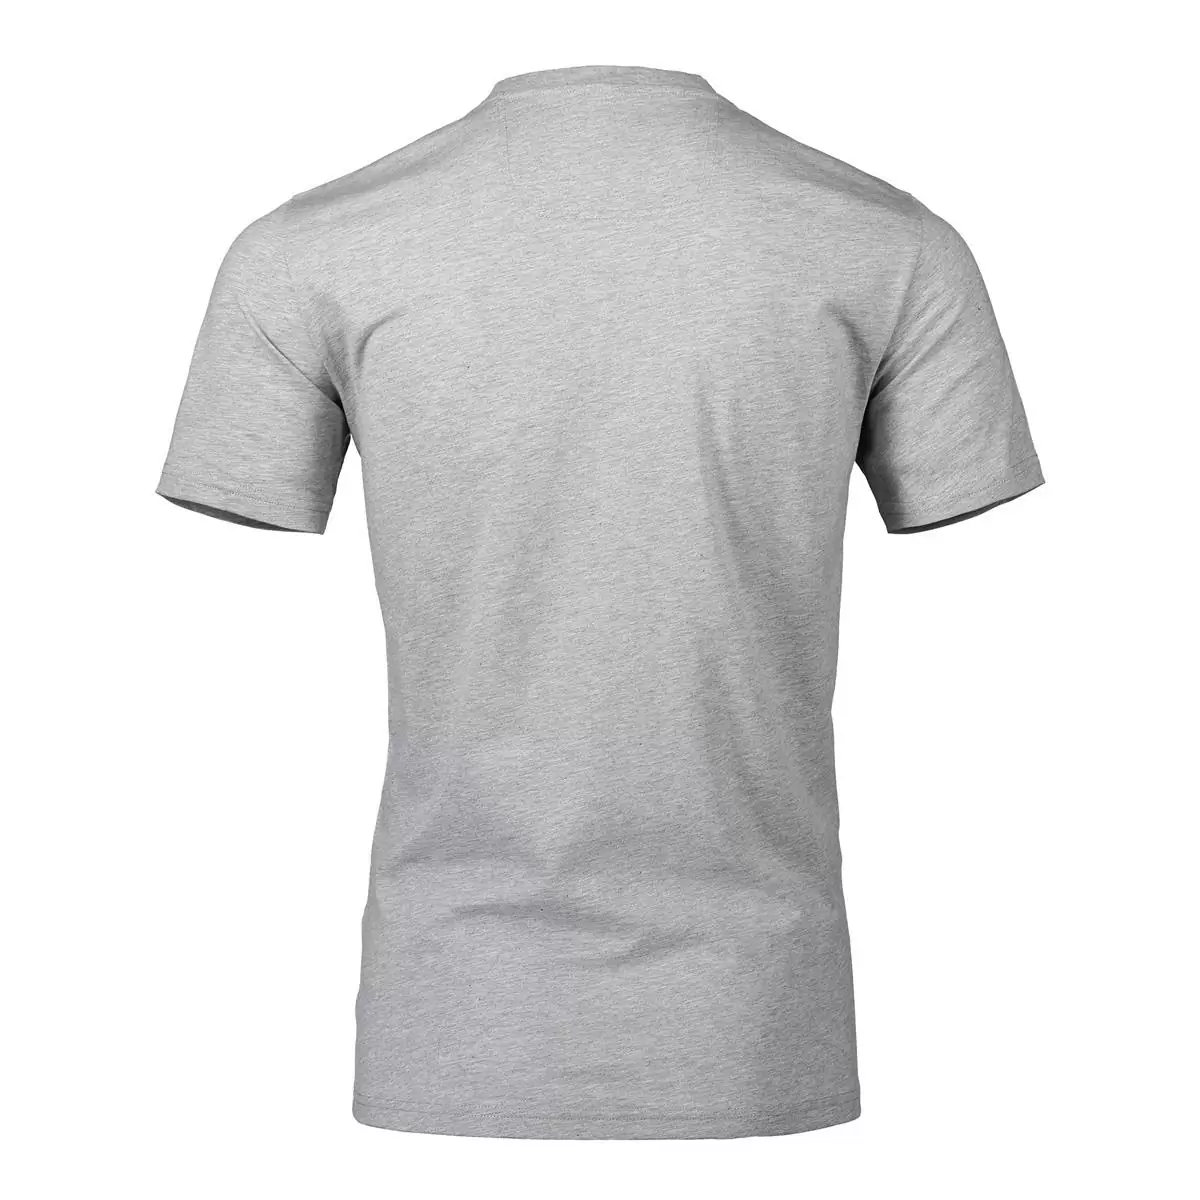 Kurzarm T-Shirt Grau Größe L #1